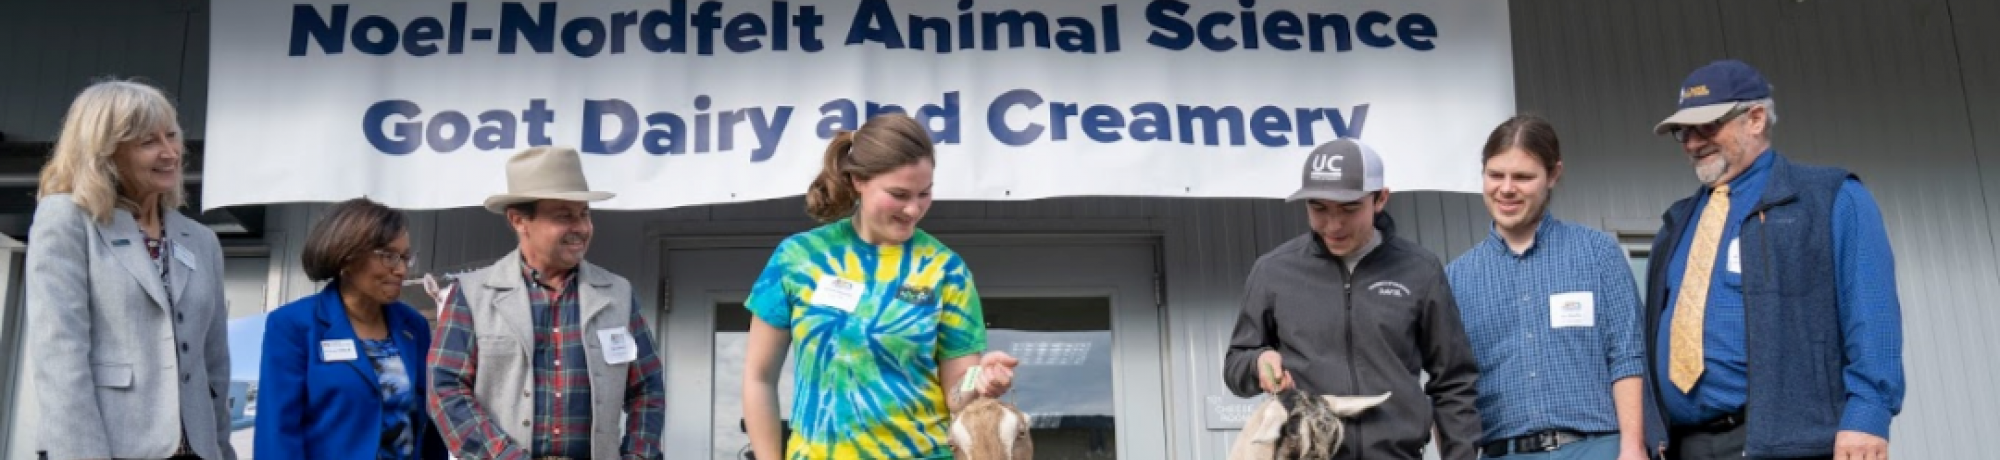 Noel-Nordfelt Animal Science Goat Dairy and Creamery